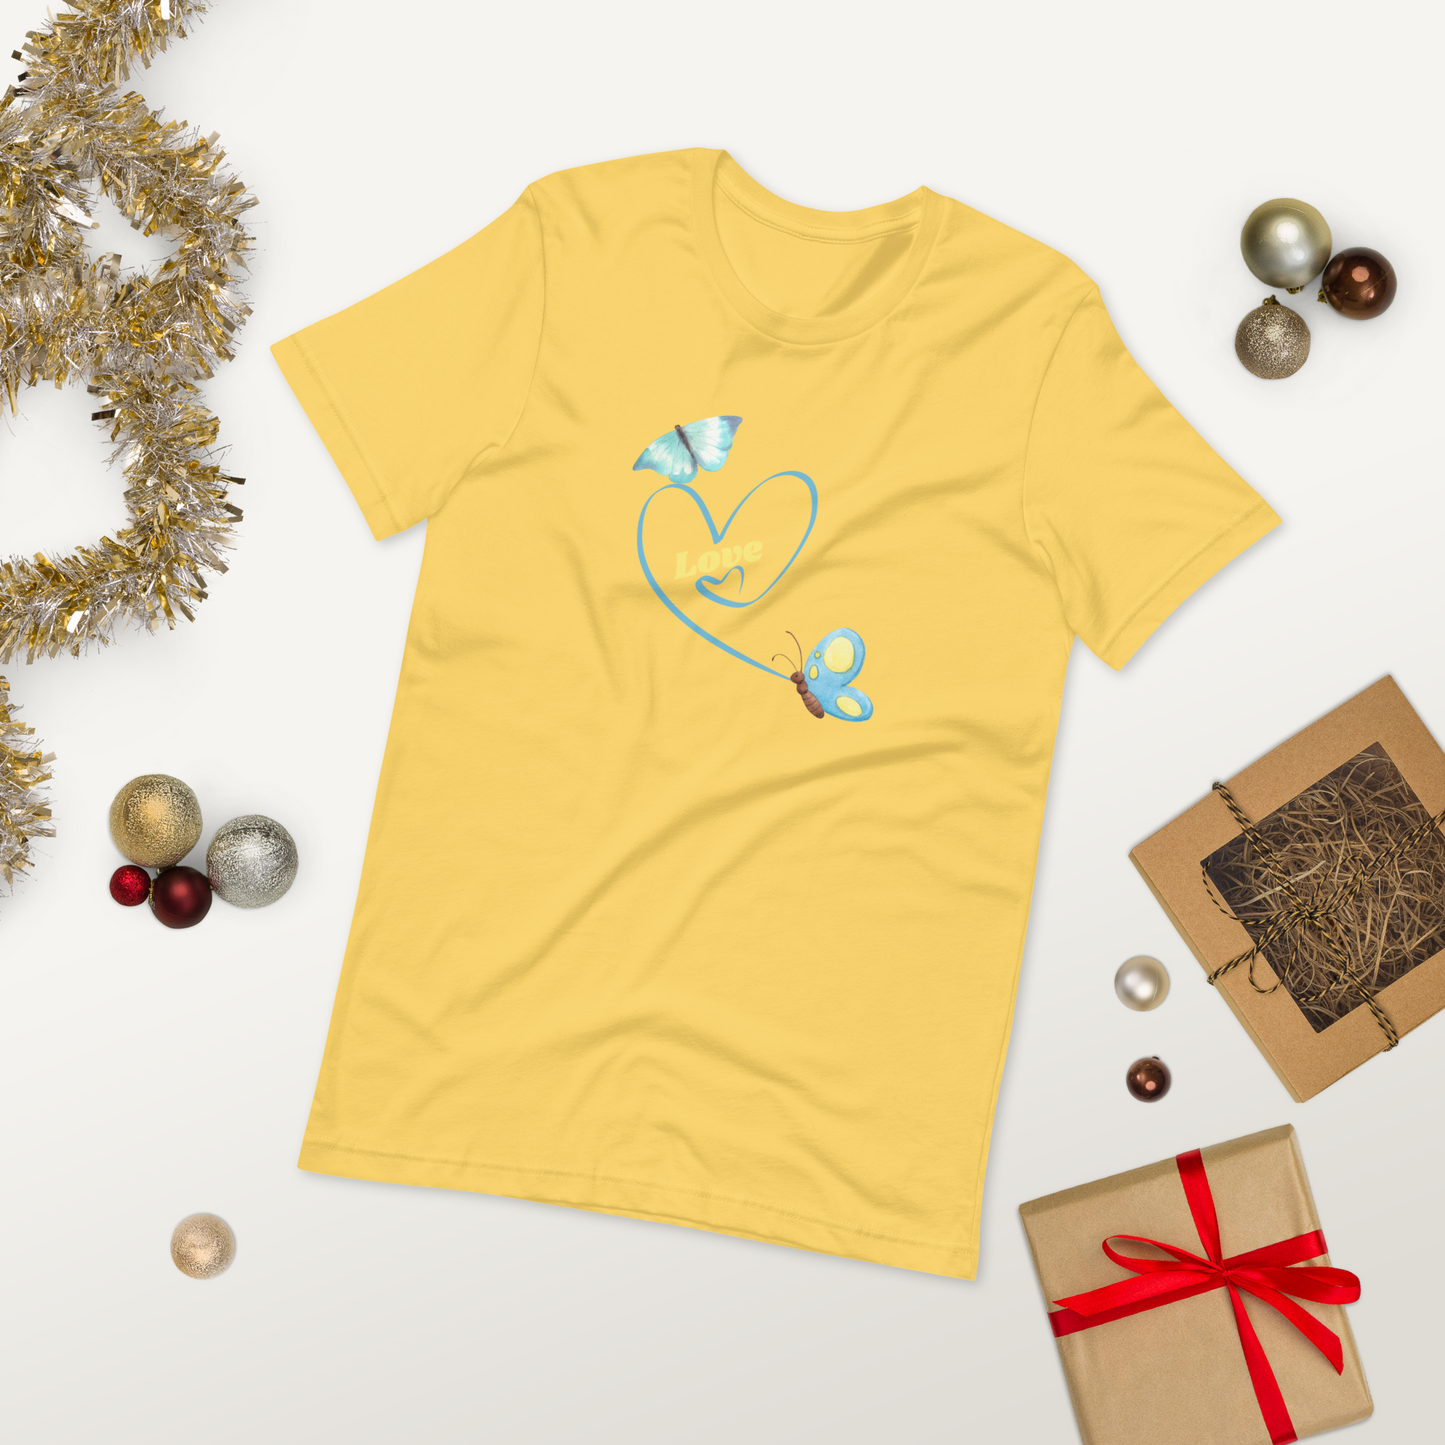 Unisex T-Shirt - Spread Love Everywhere You Go - Wear Your Heart!